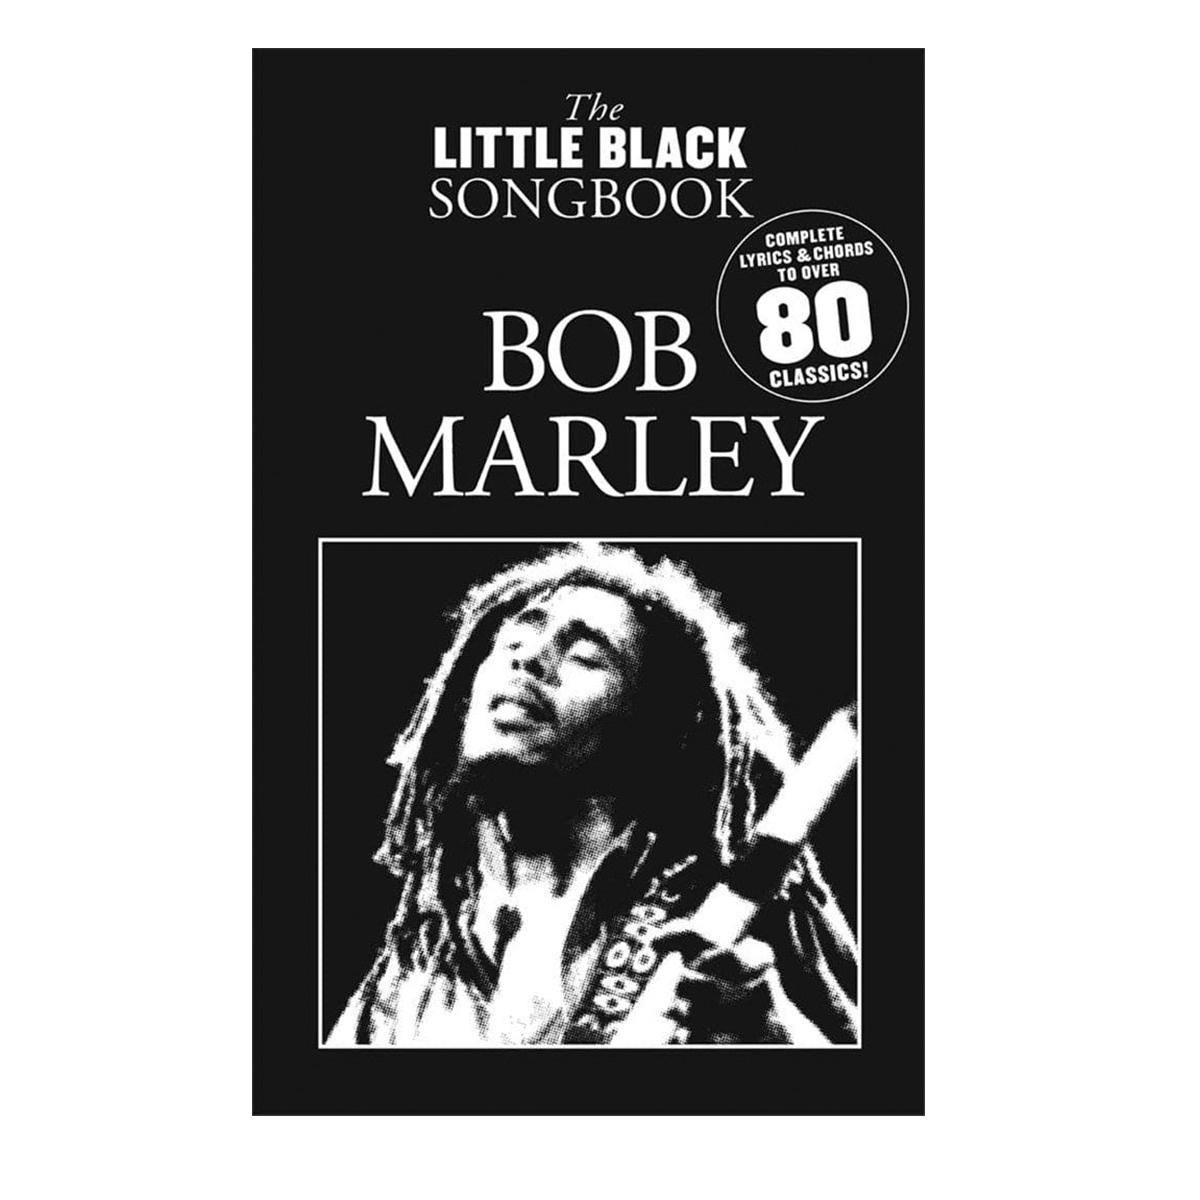 The Little Black Songbook - Bob Marley